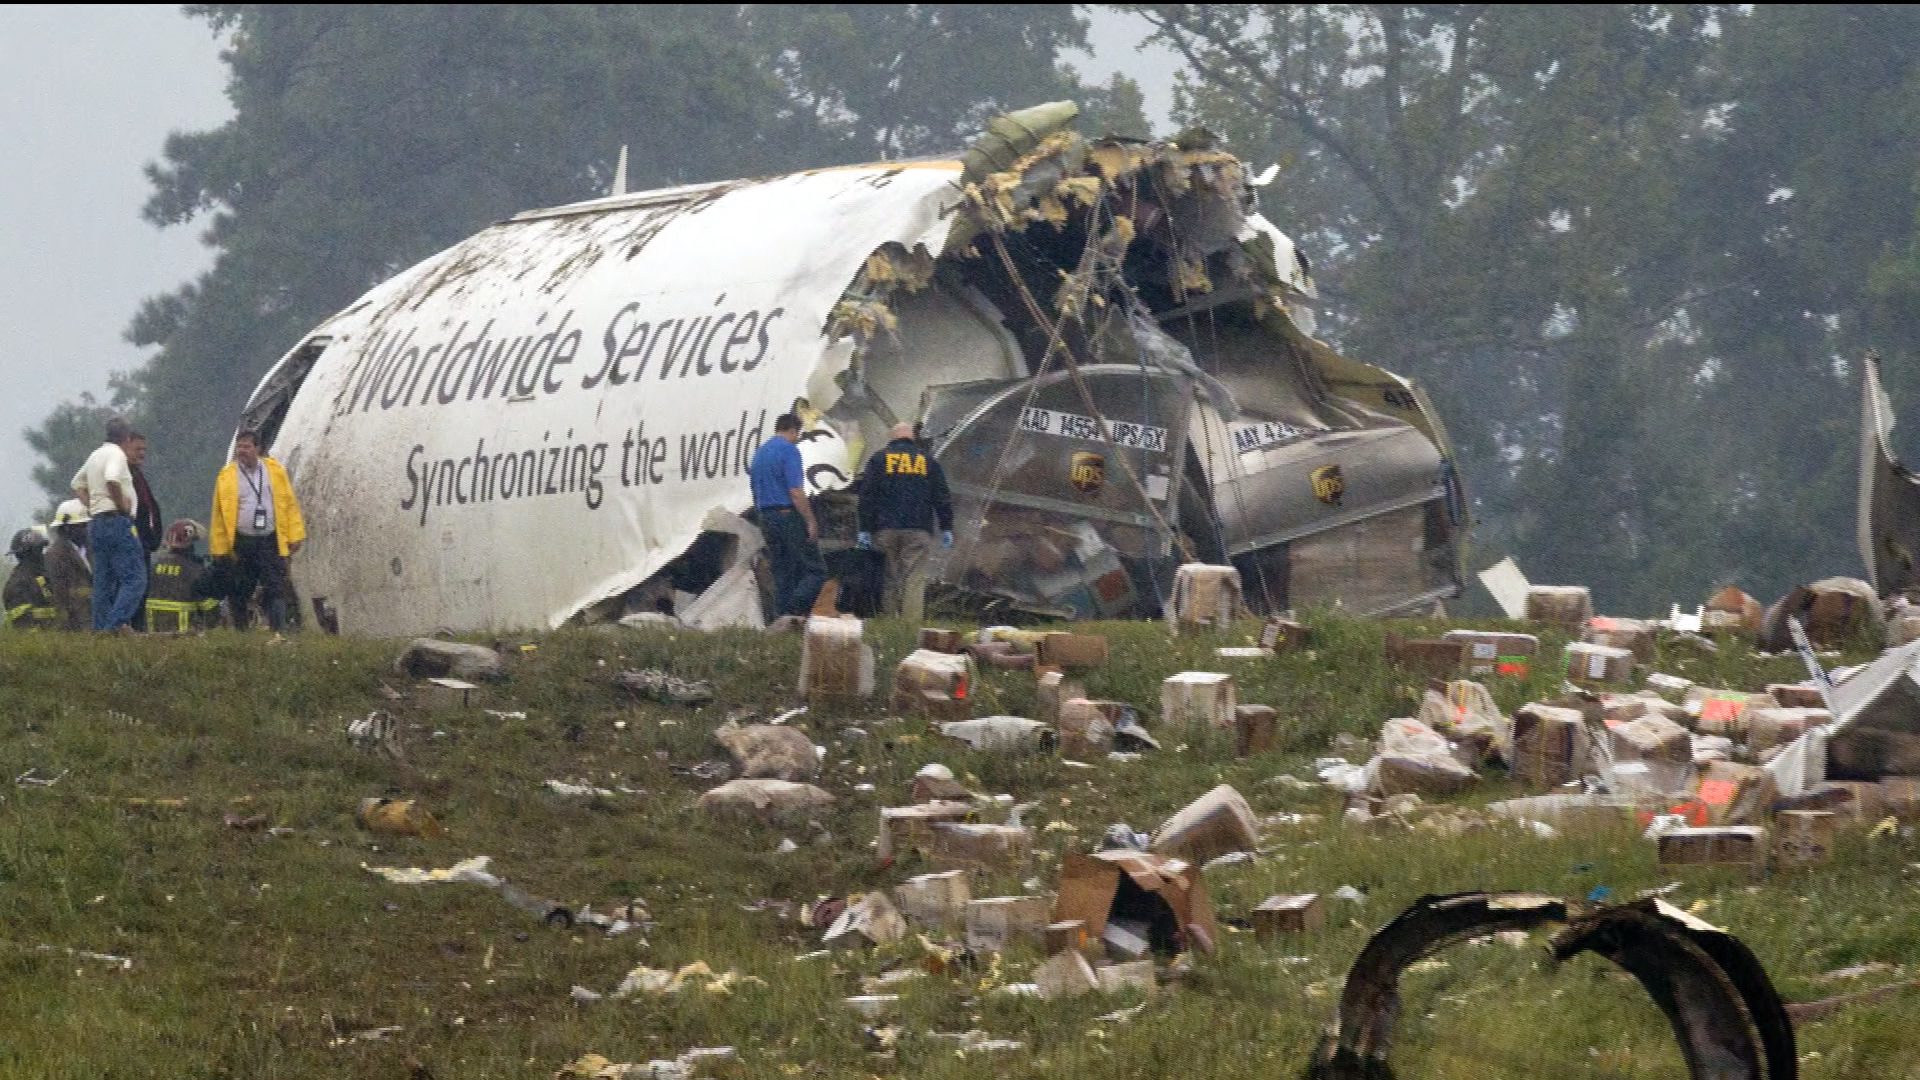 Going to crash. Canadair crash. Plane Water crash Carrier. Авария MD-11 авиакомпании ups.